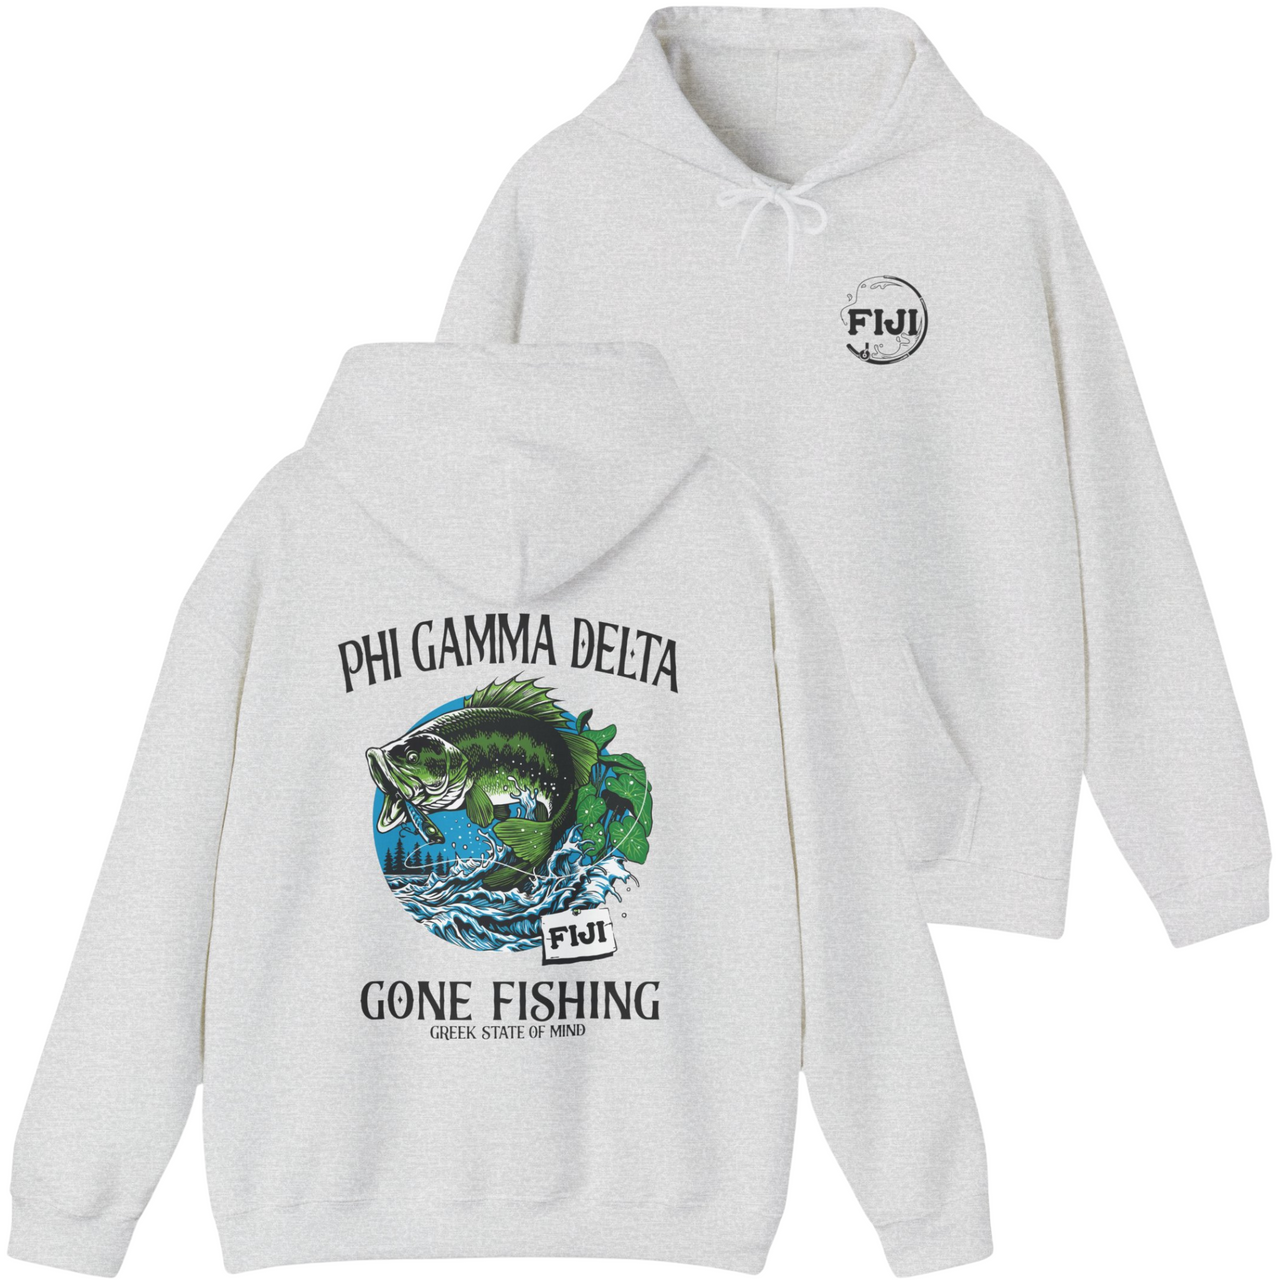 Phi Gamma Delta Graphic Hoodie | Gone Fishing